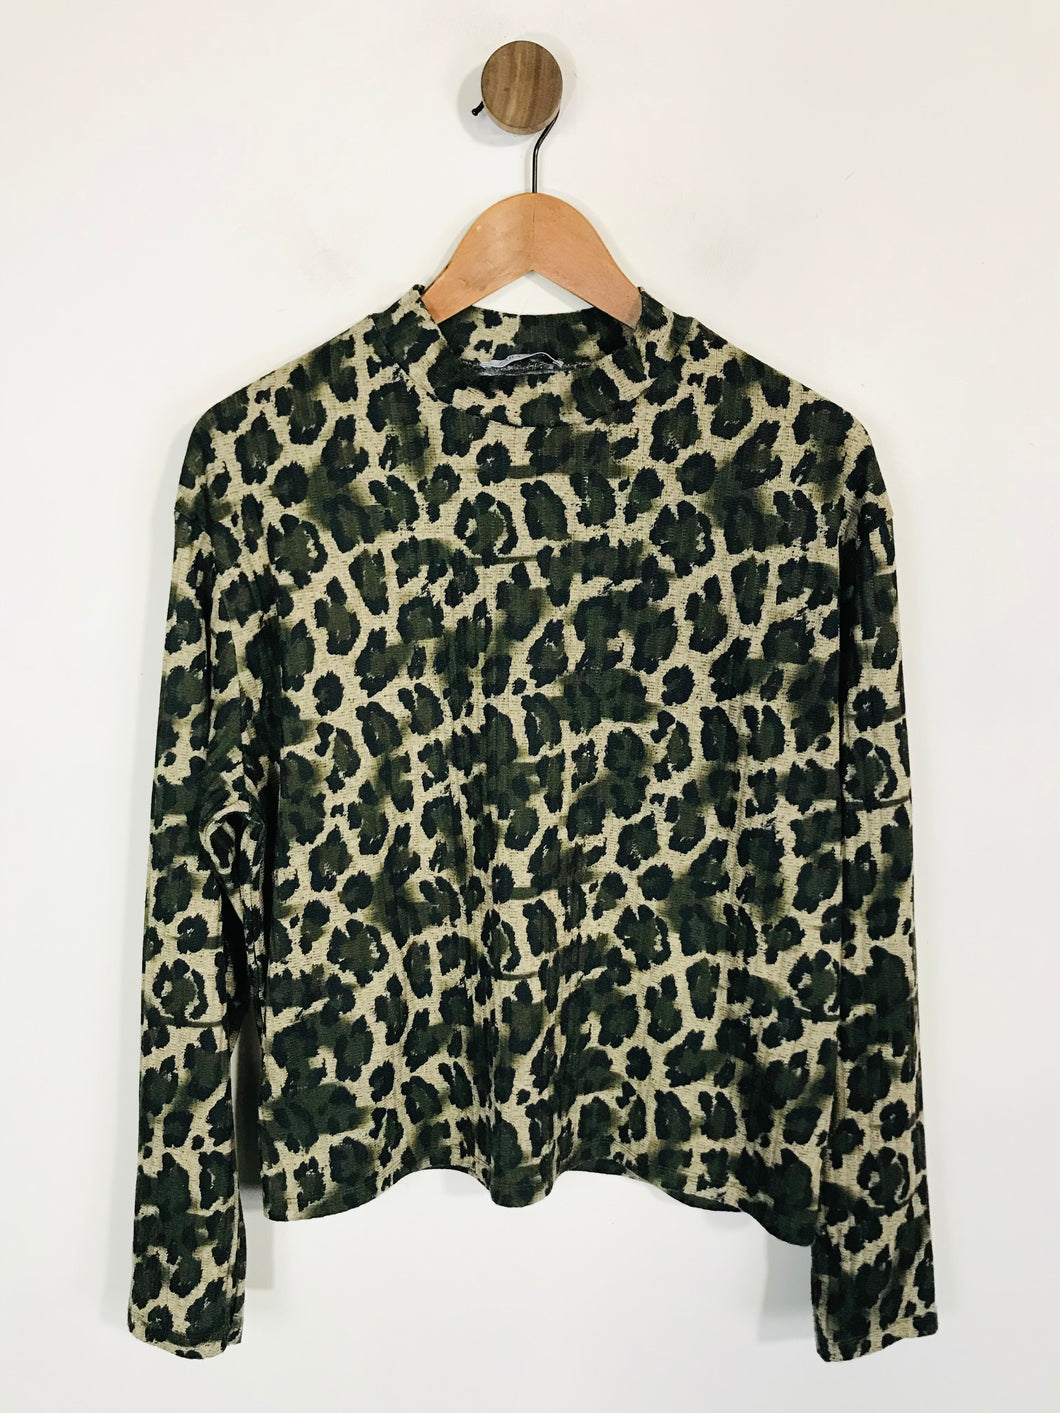 Zara Women's Leopard Print High Neck T-Shirt | L UK14 | Multicoloured